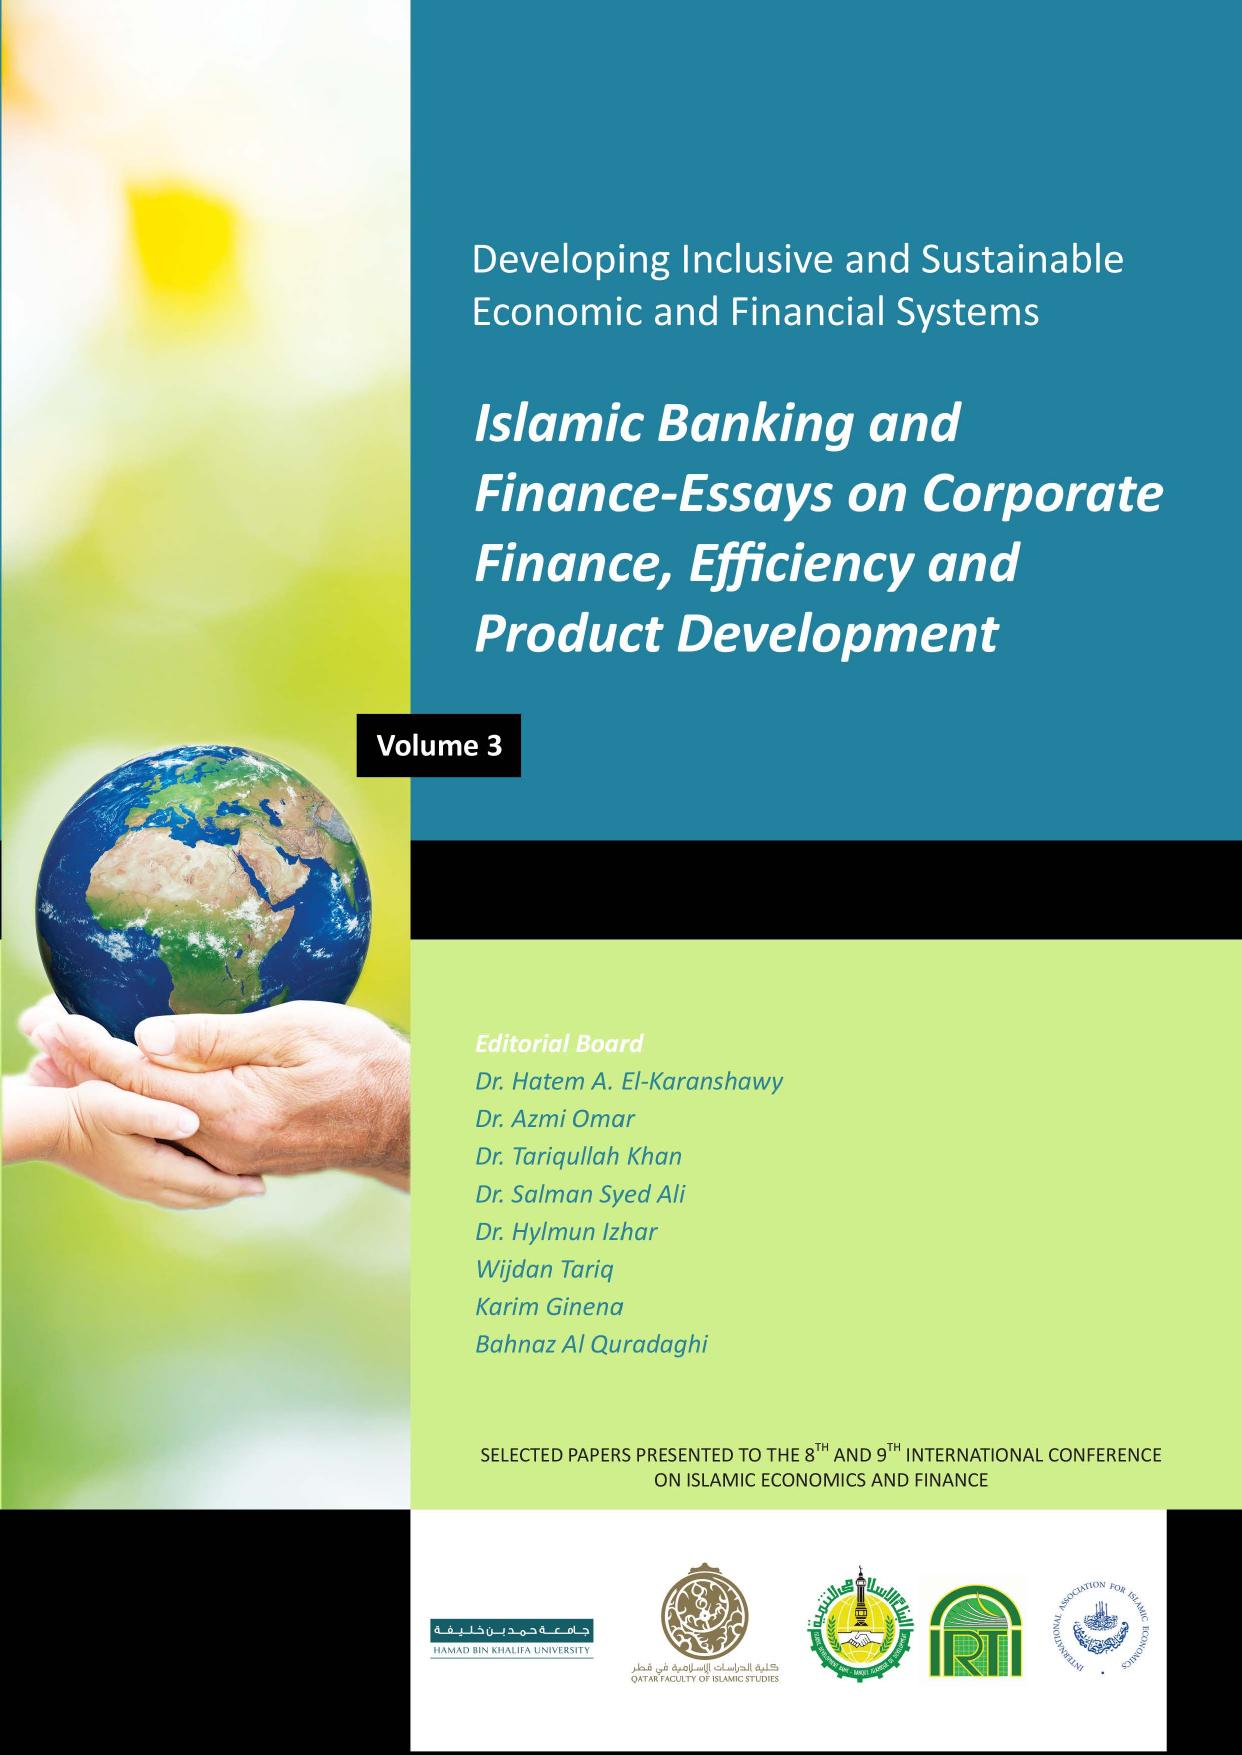 Islamic banking and finance 2015.pdf